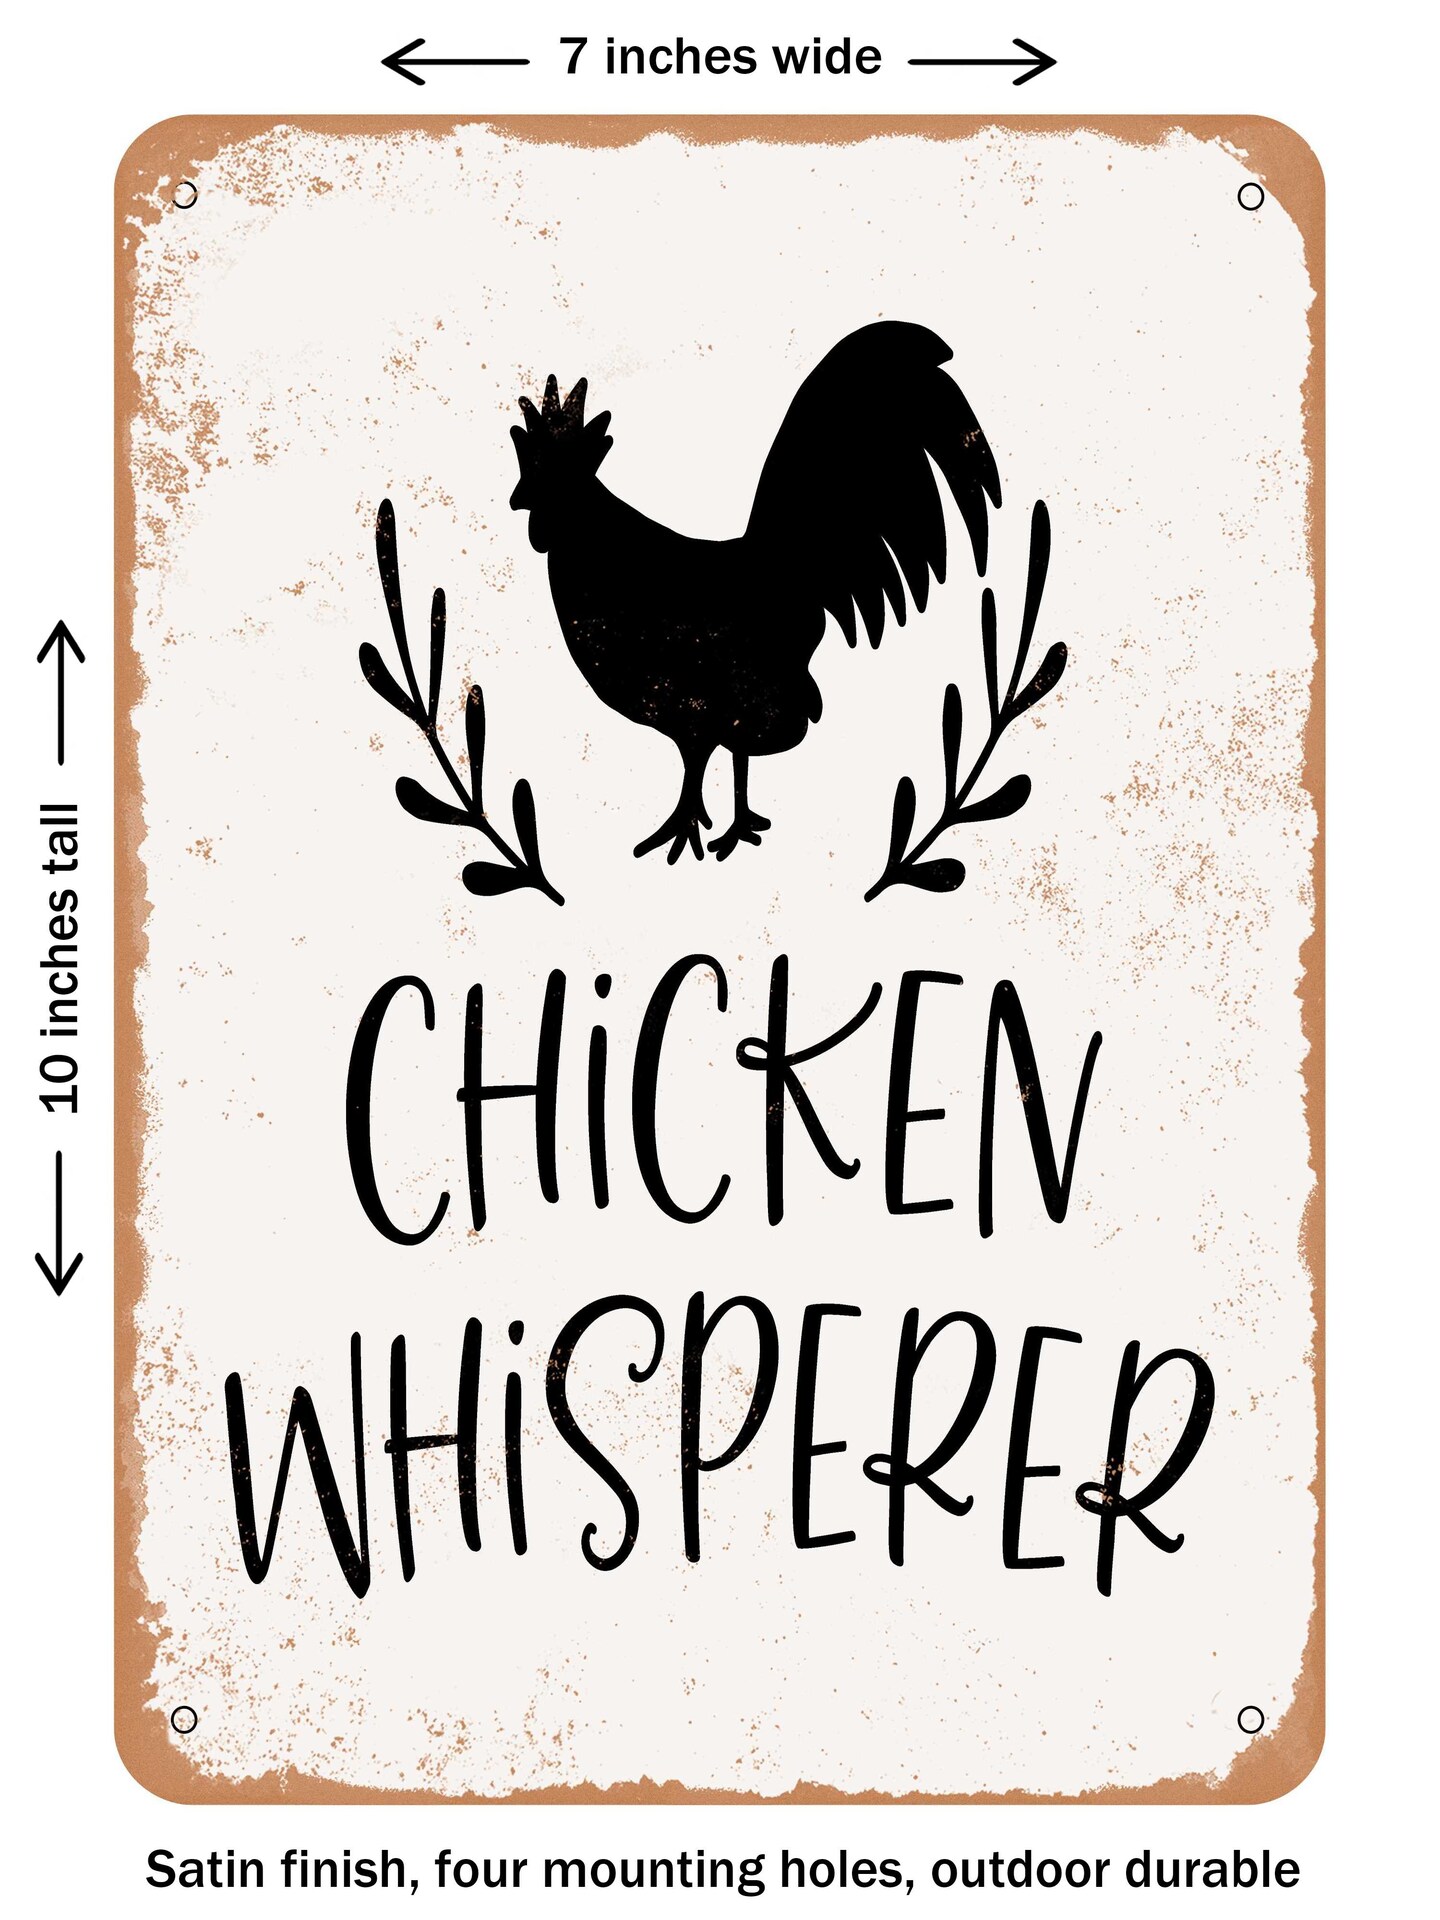 DECORATIVE METAL SIGN - Chicken Whisperer - Vintage Rusty Look